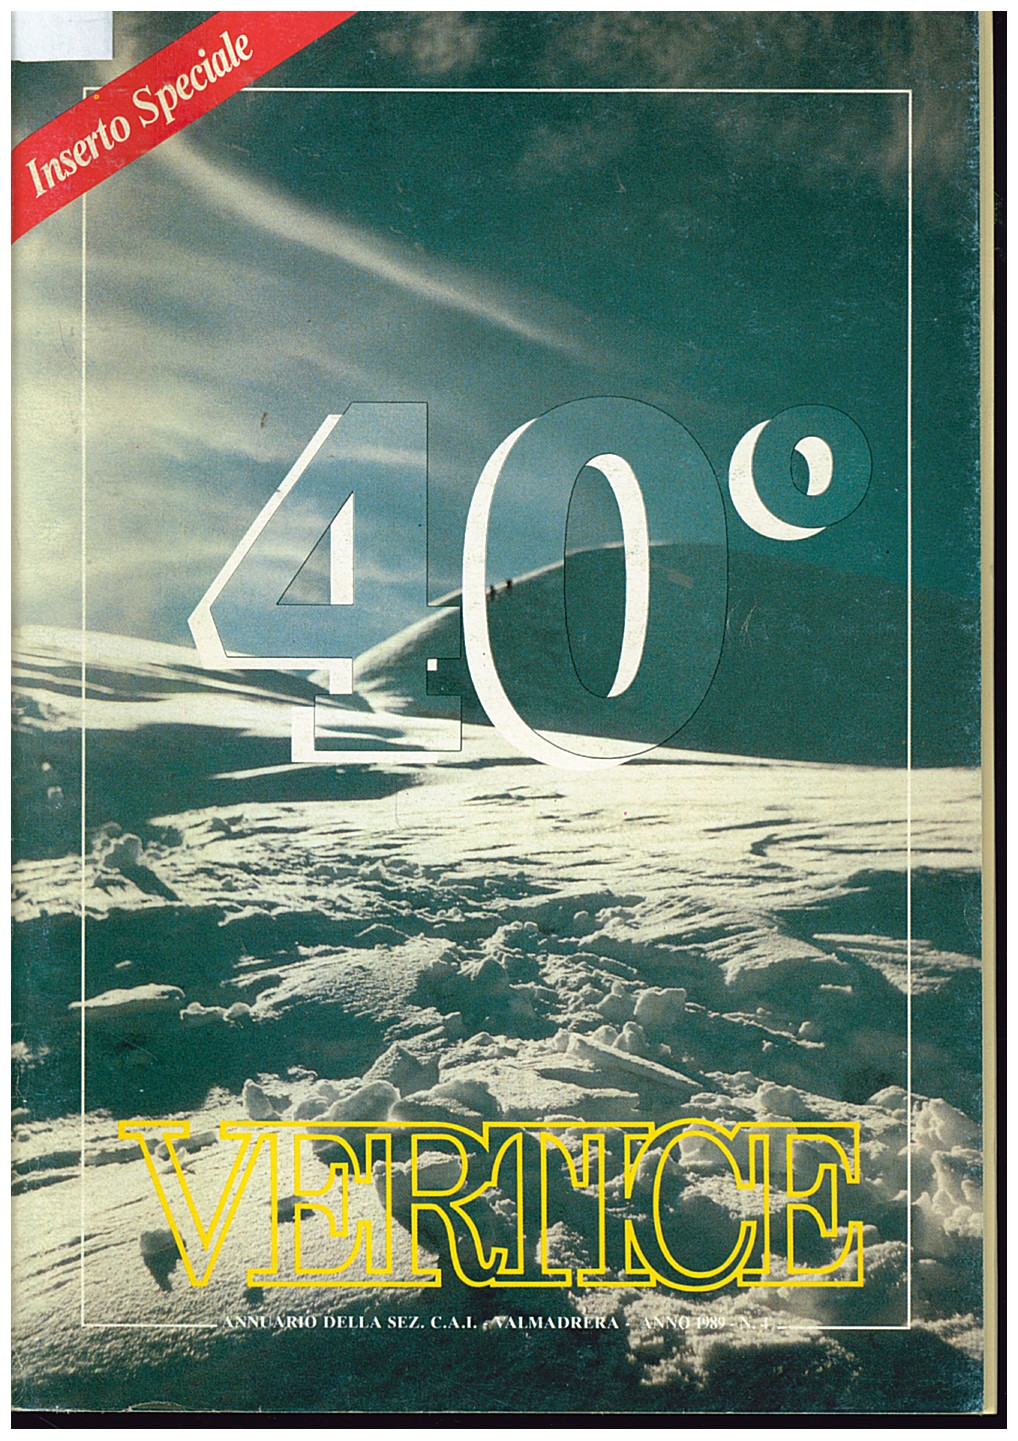 Copertina di Vertice - Annuario CAI Valmadrera (1989)